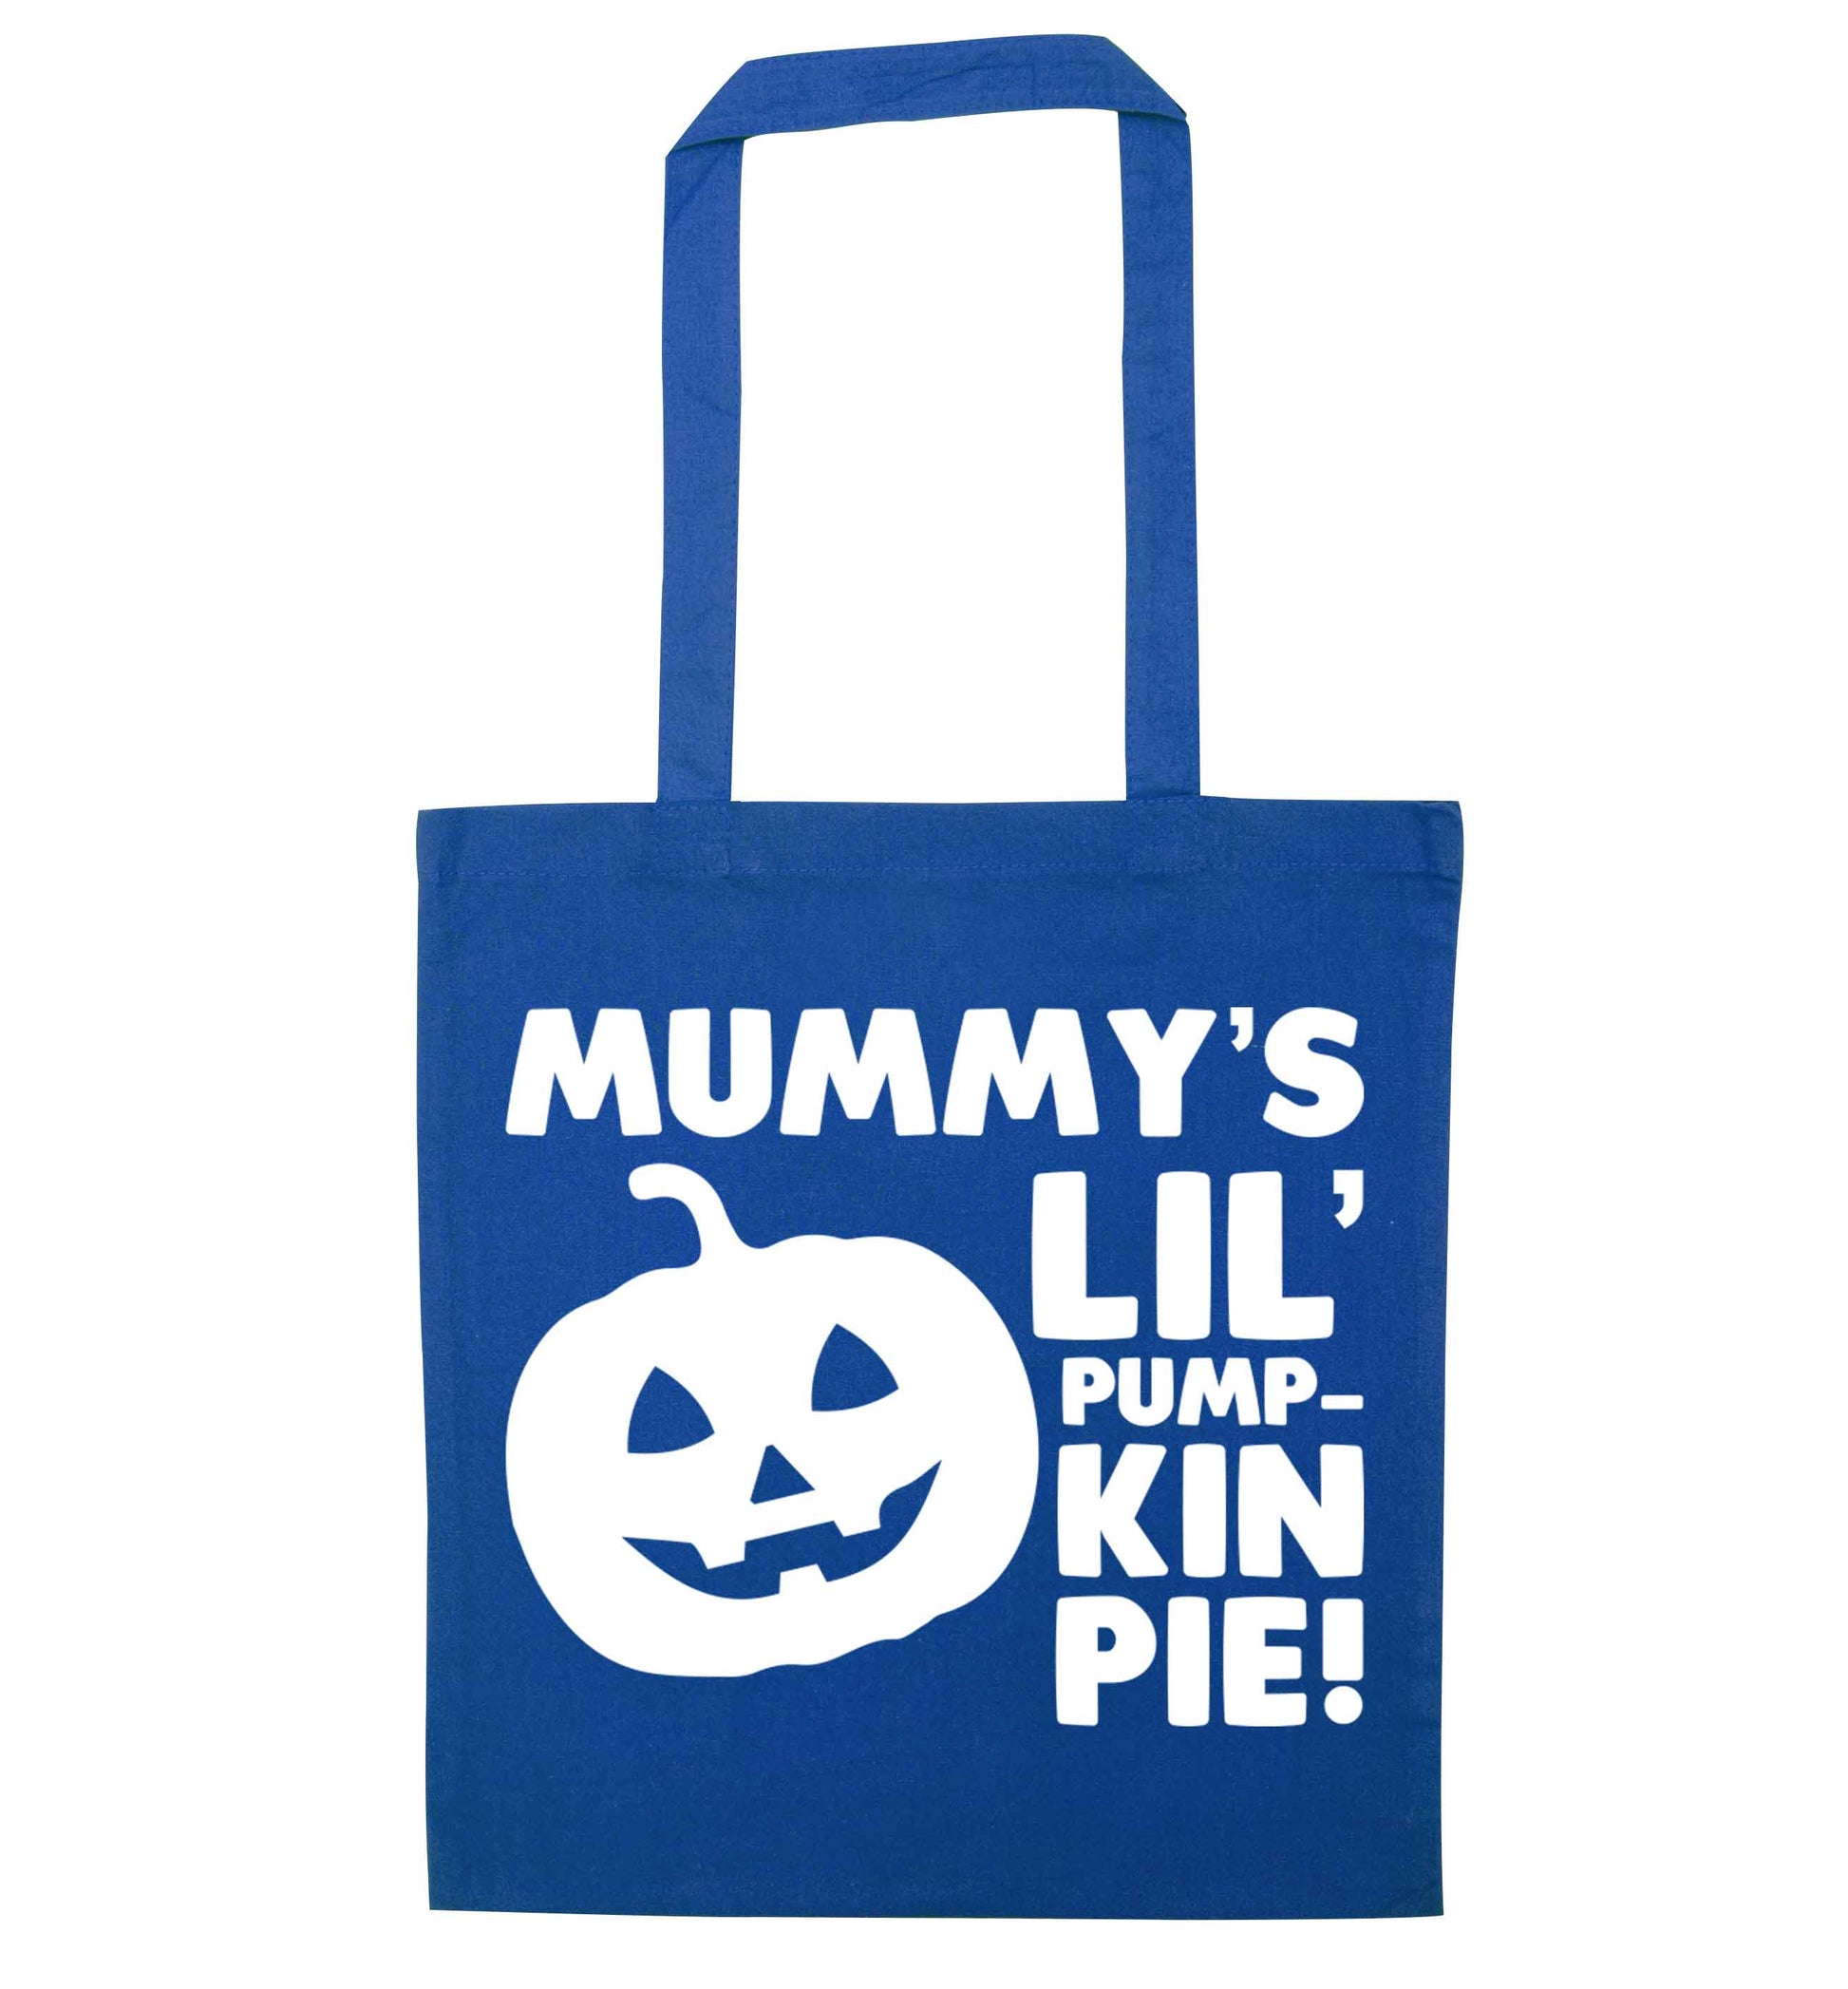 Mummy's lil' pumpkin pie blue tote bag